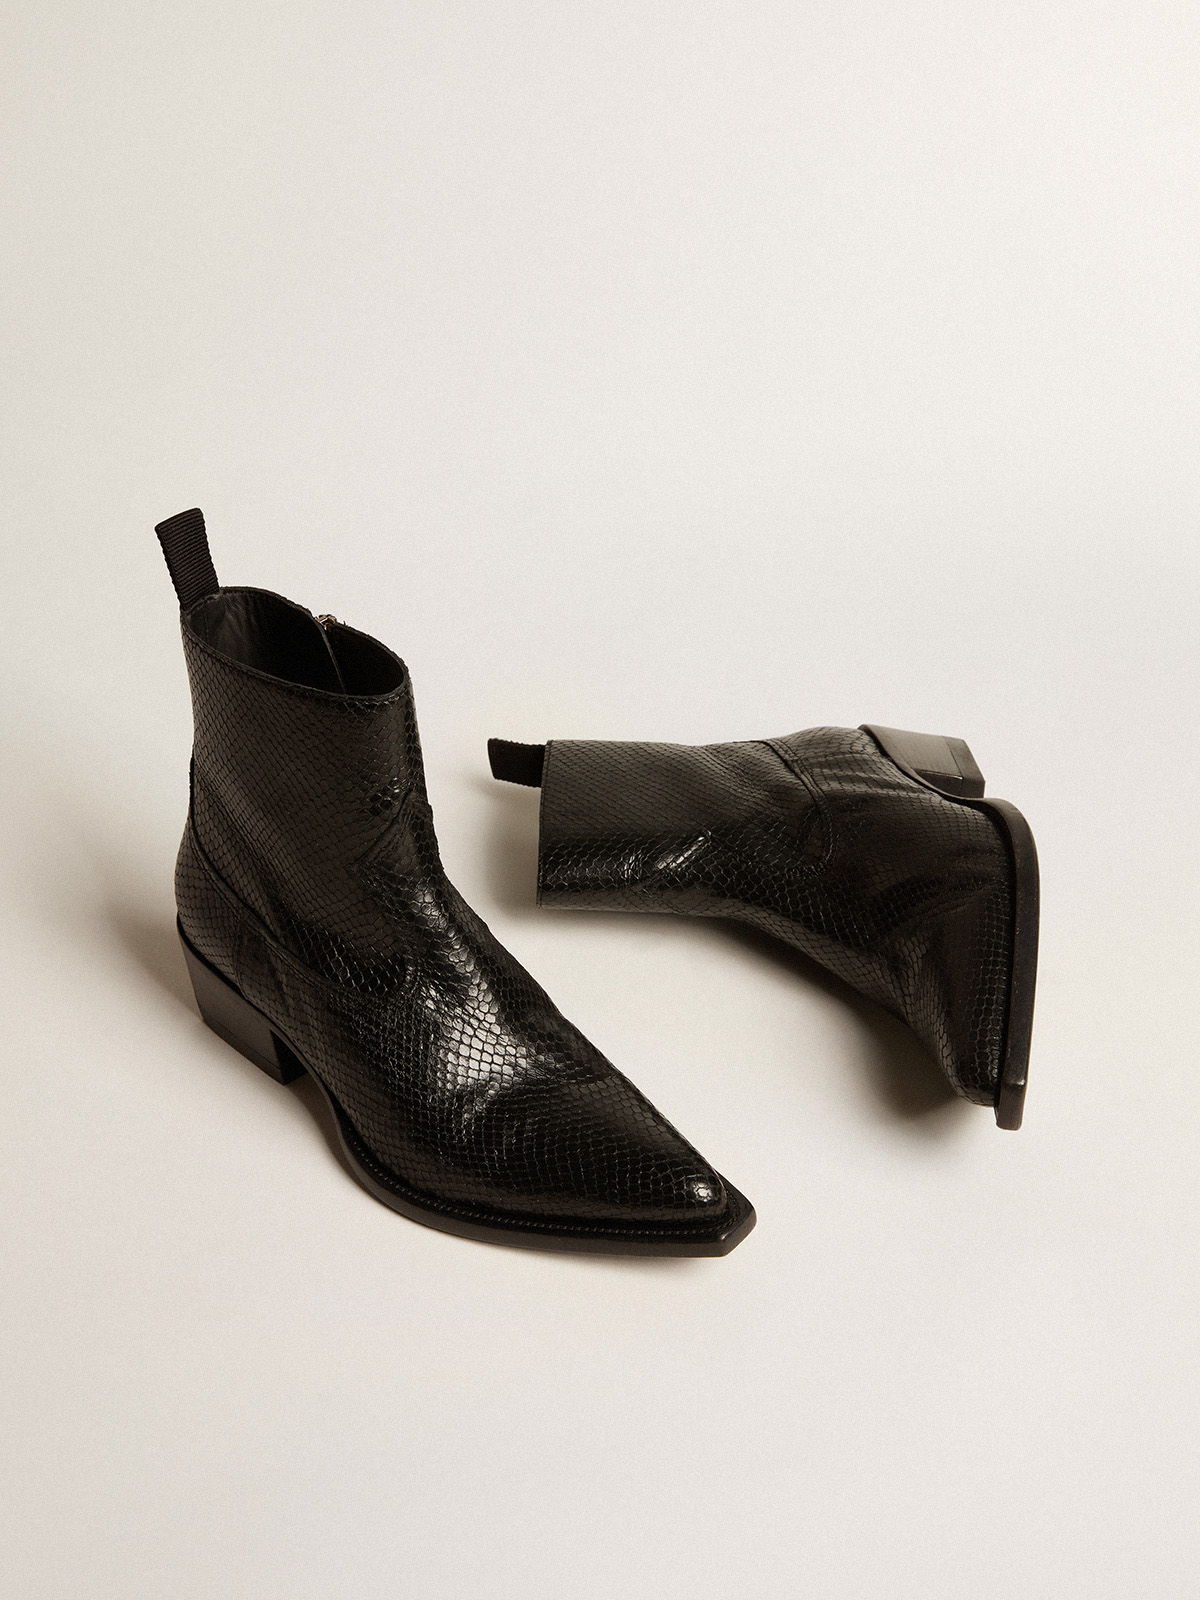 Low Debbie boots in black snake-print leather | Golden Goose